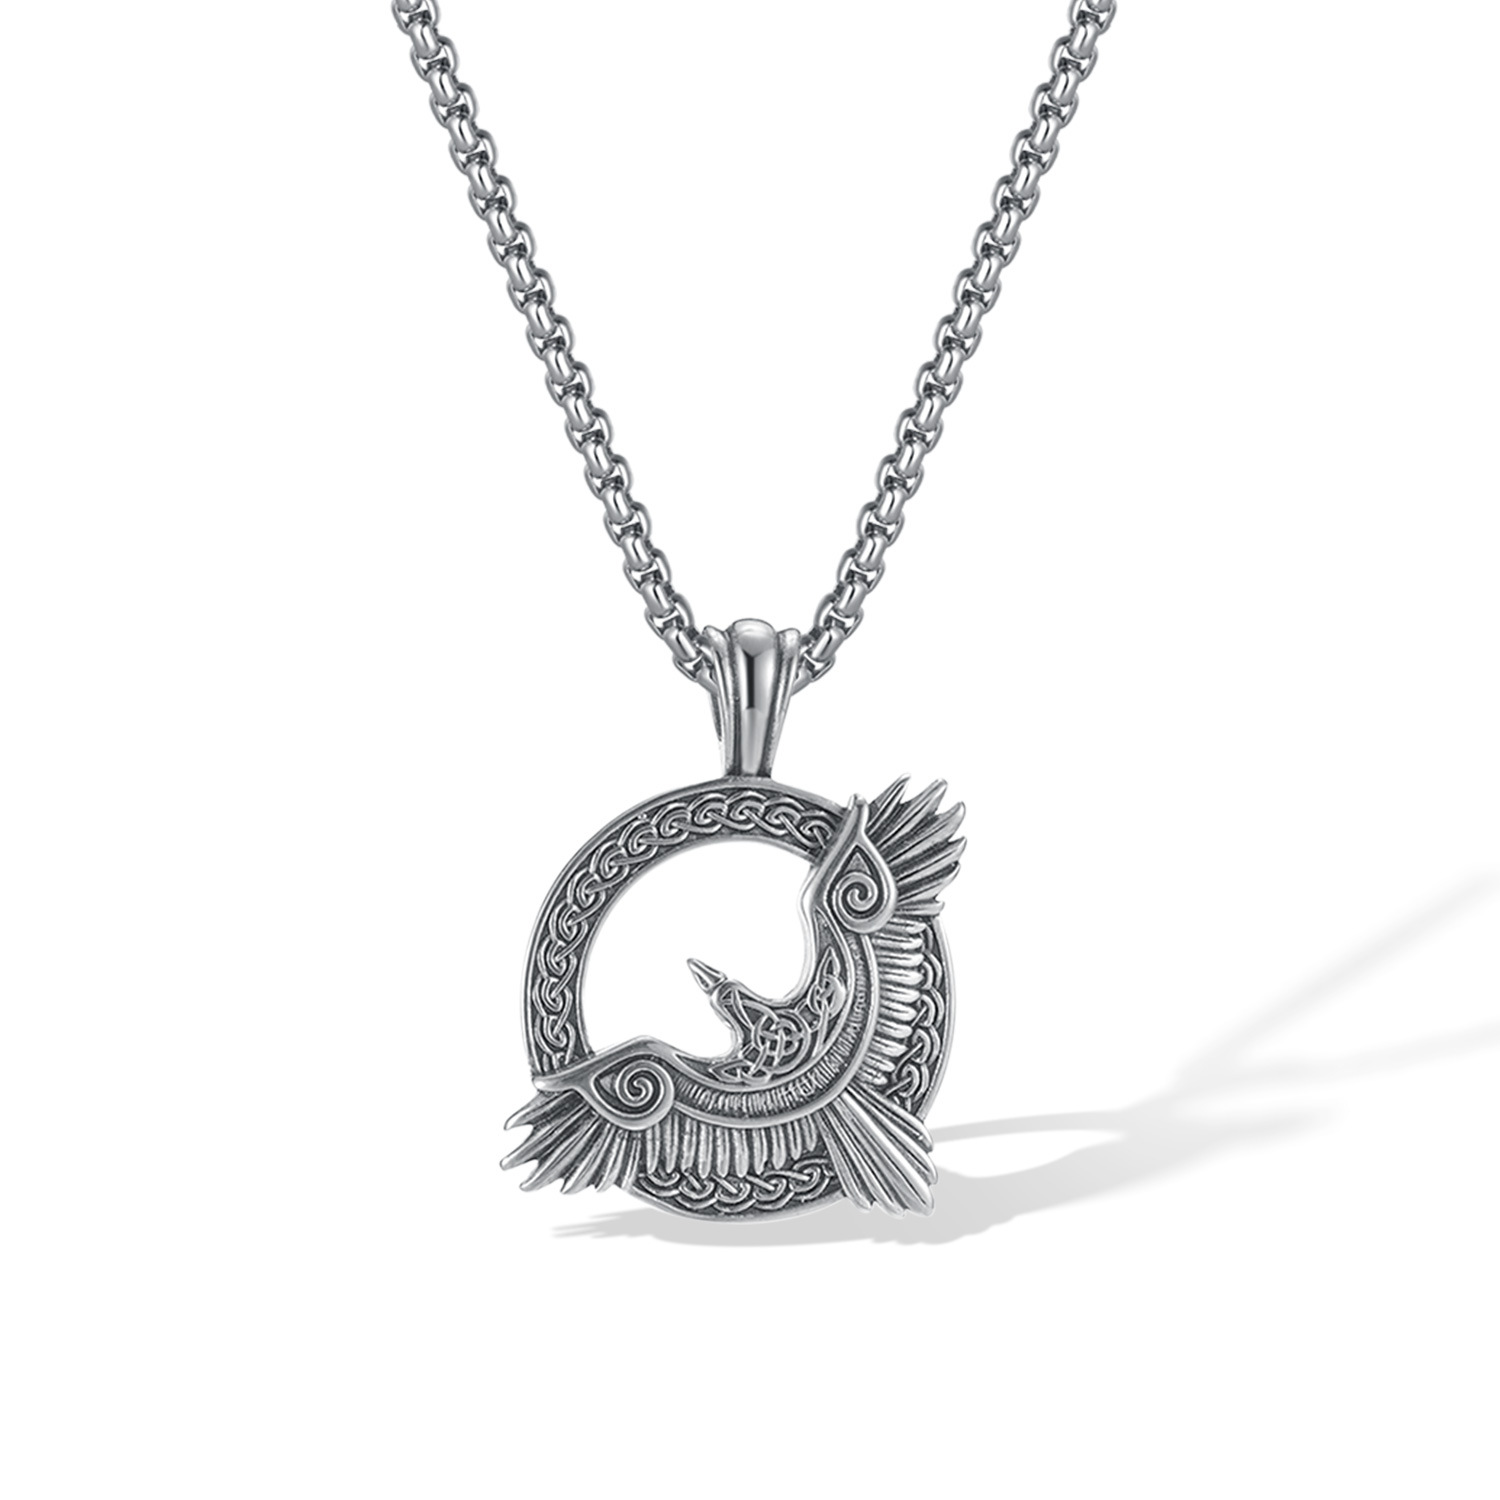 Steel pendant with chain 4x70cm